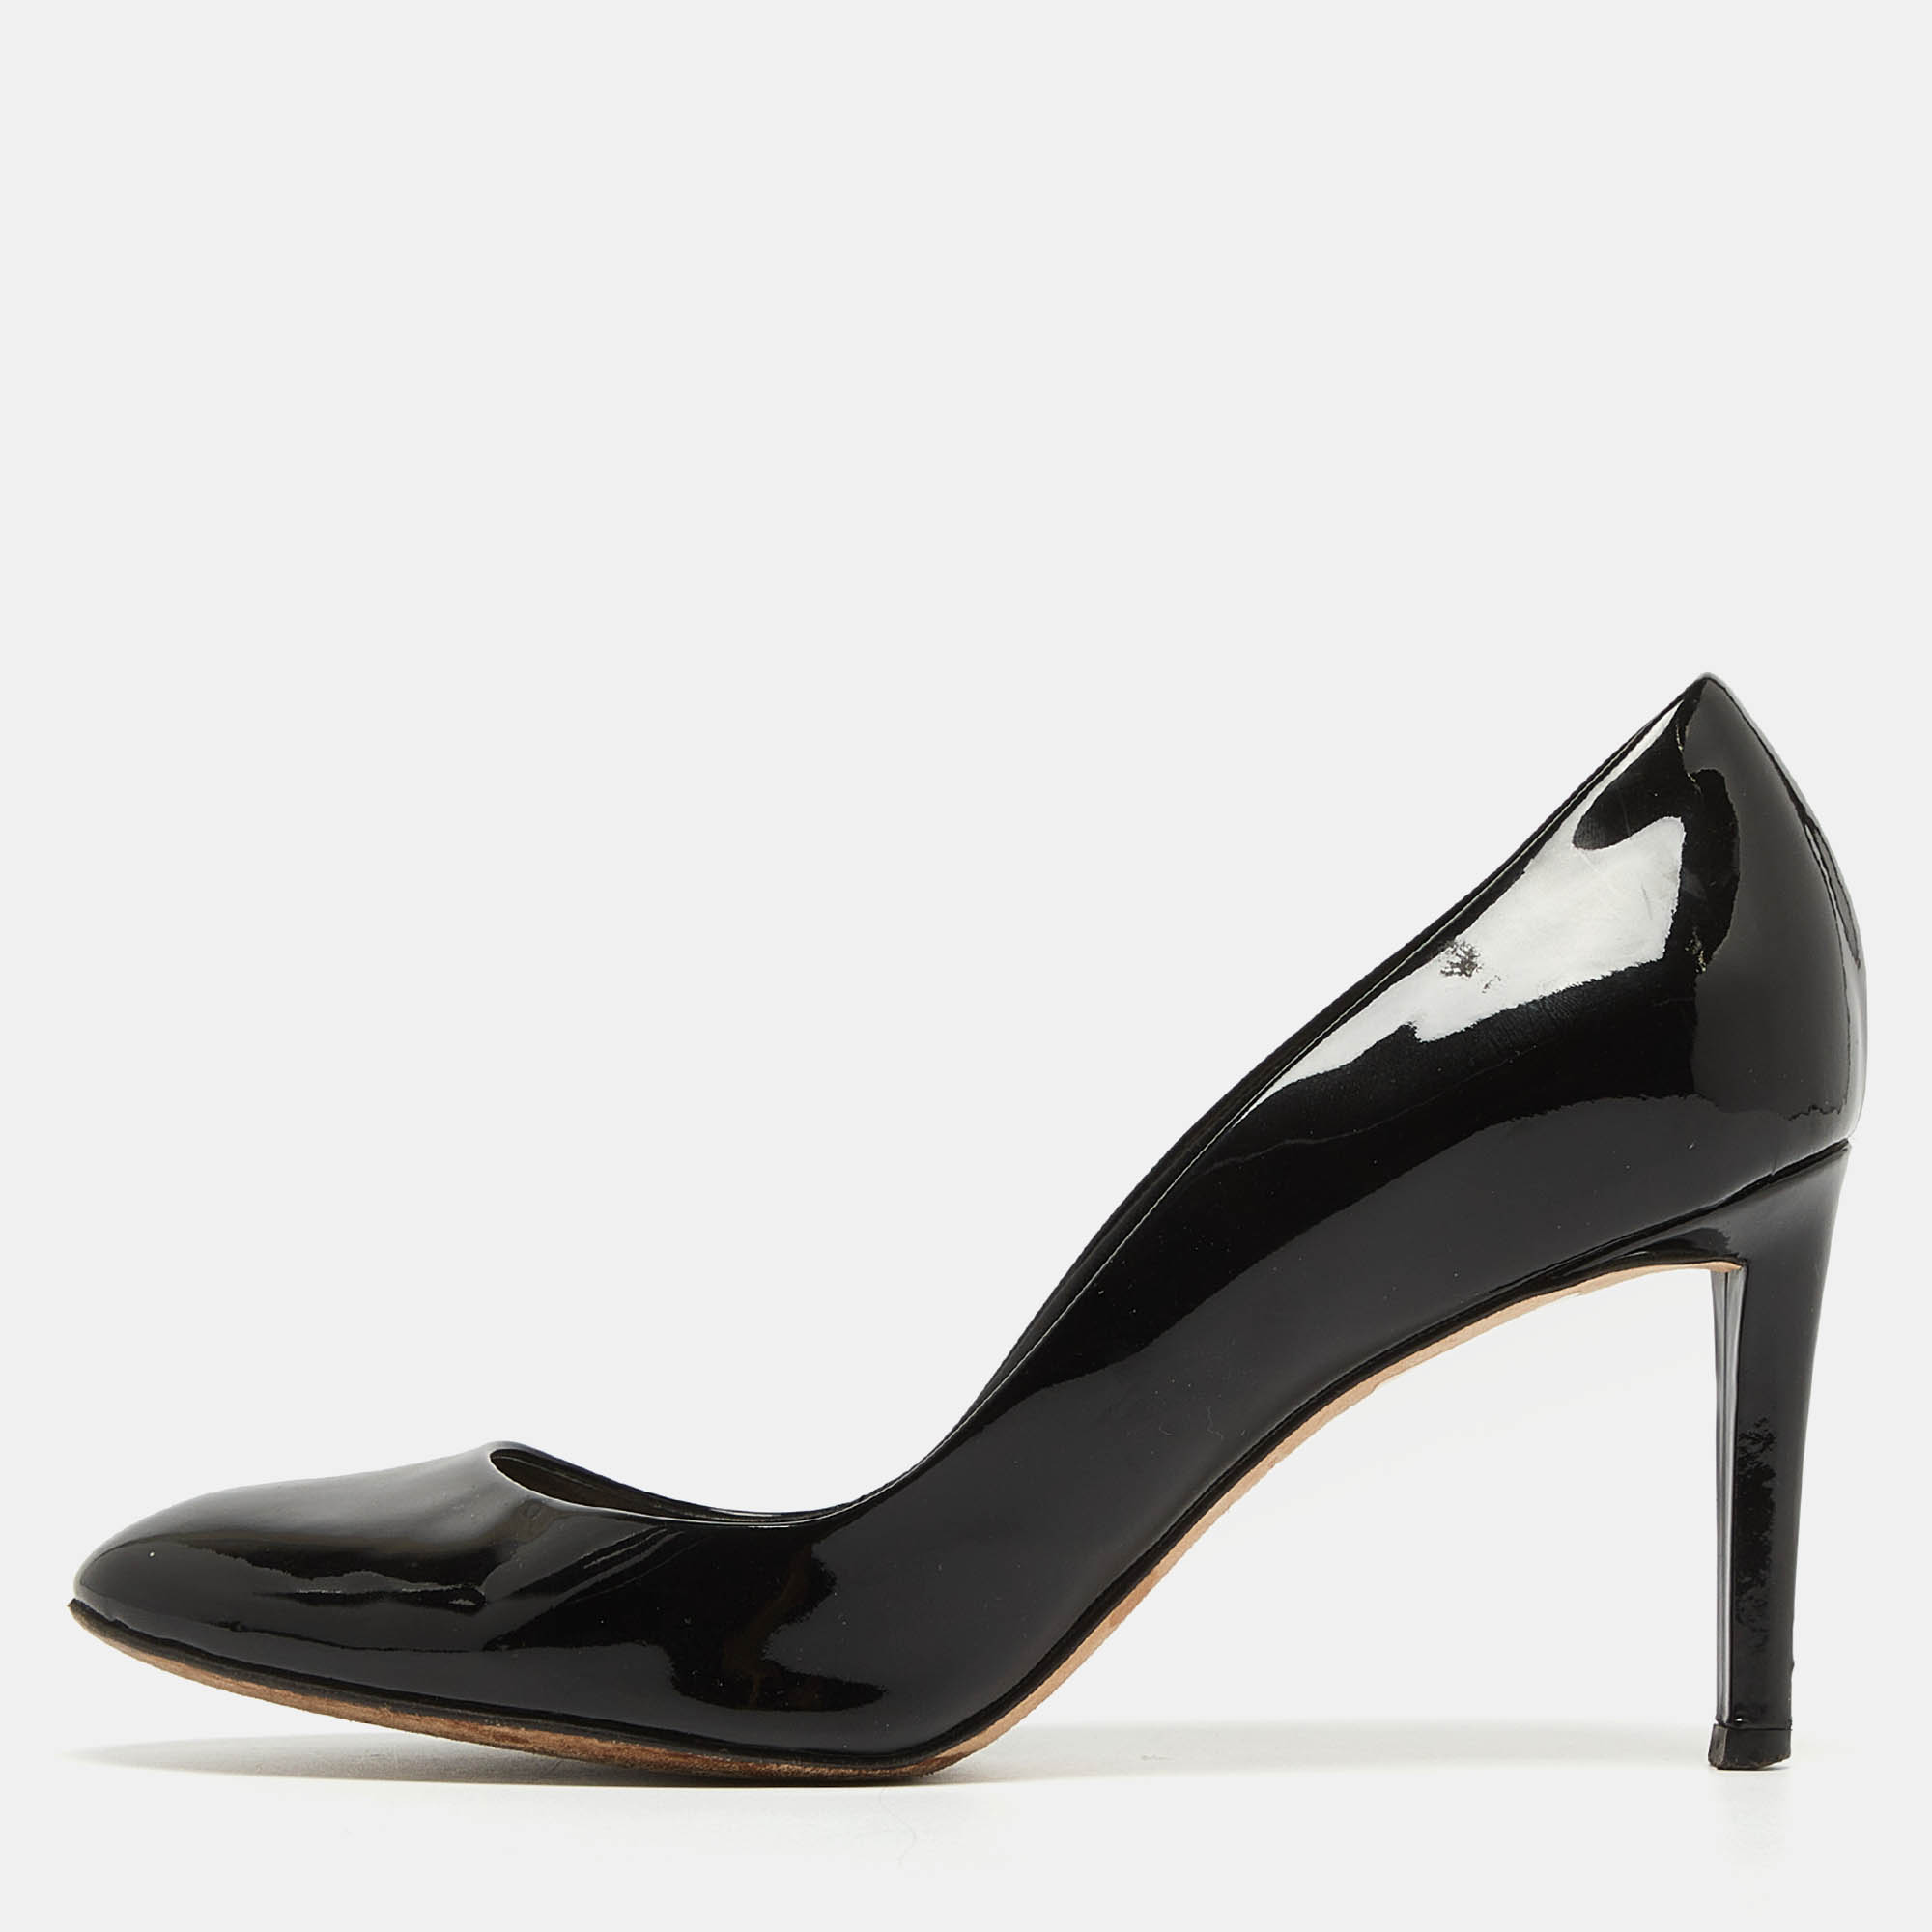 Dior black patent leather round toe pumps size 37.5